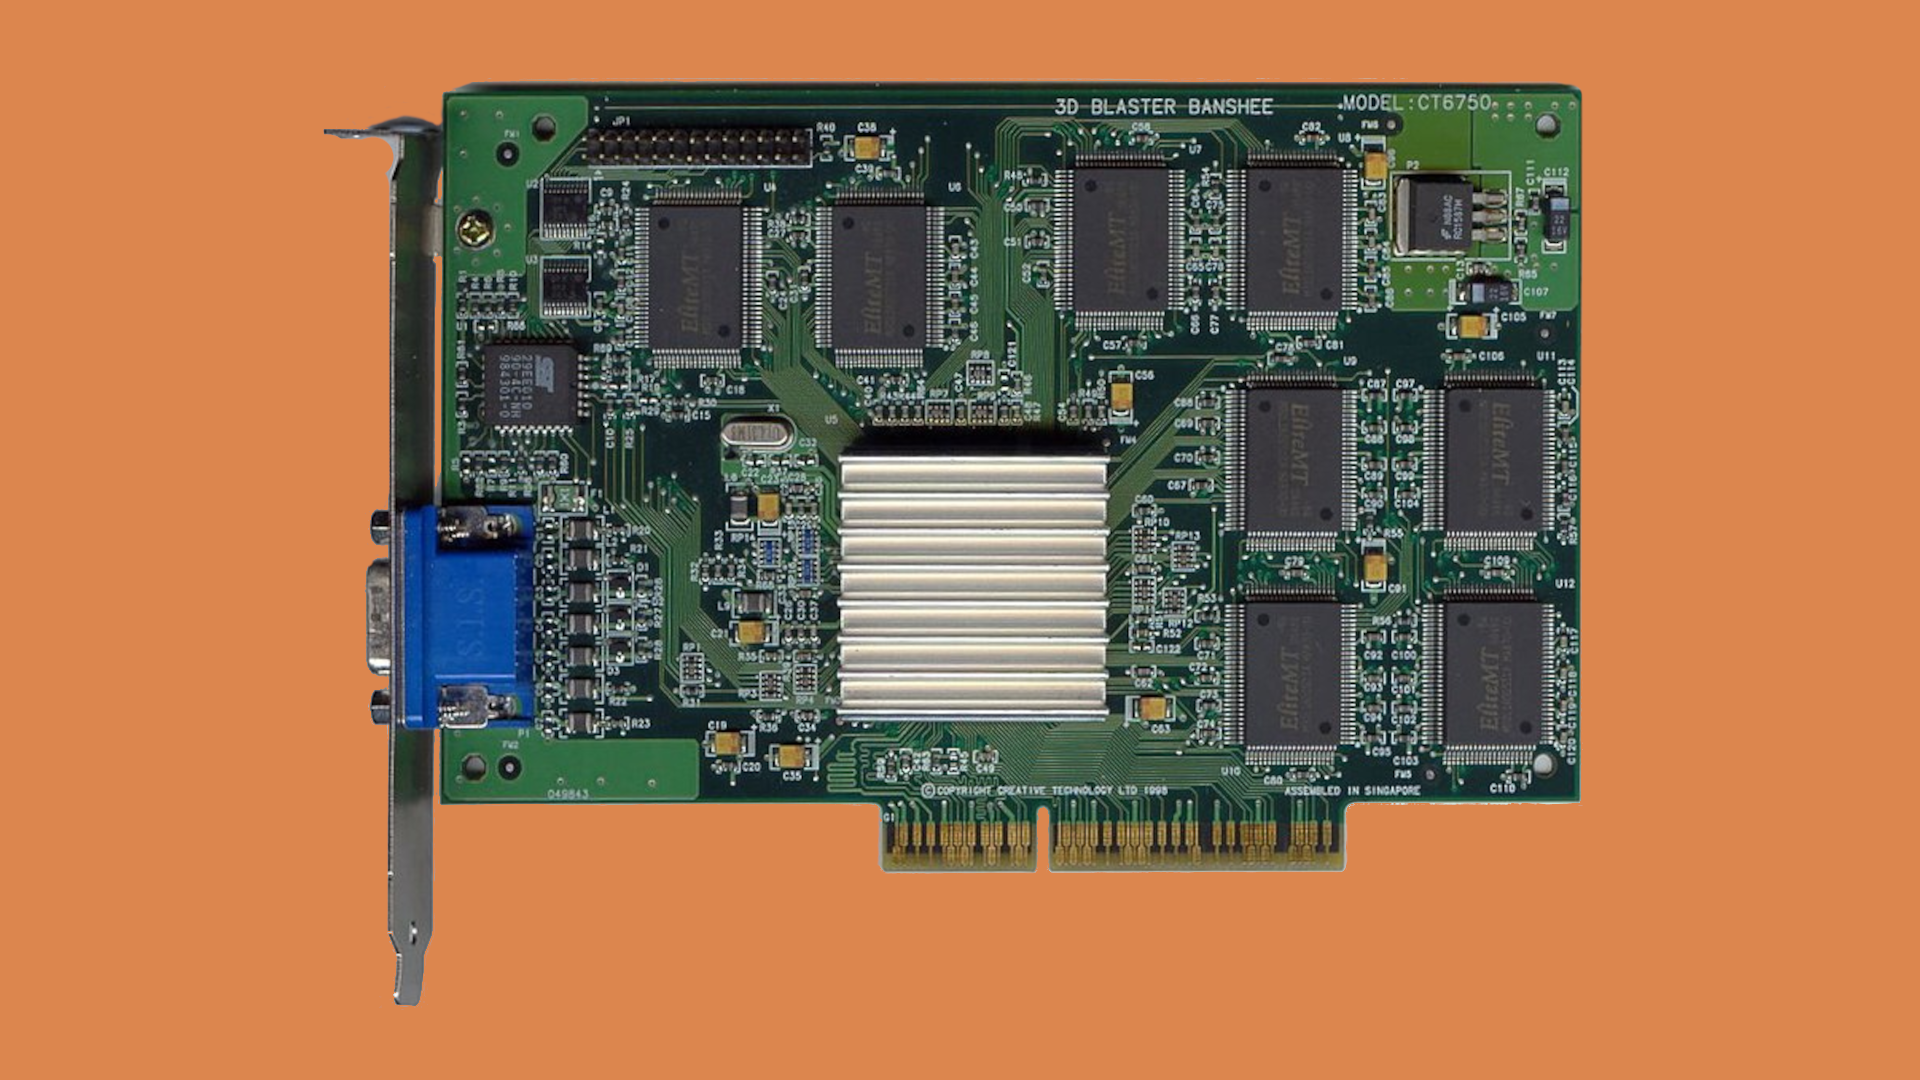 The 3dfx Voodoo Banshee AGP graphics card against an orange background.